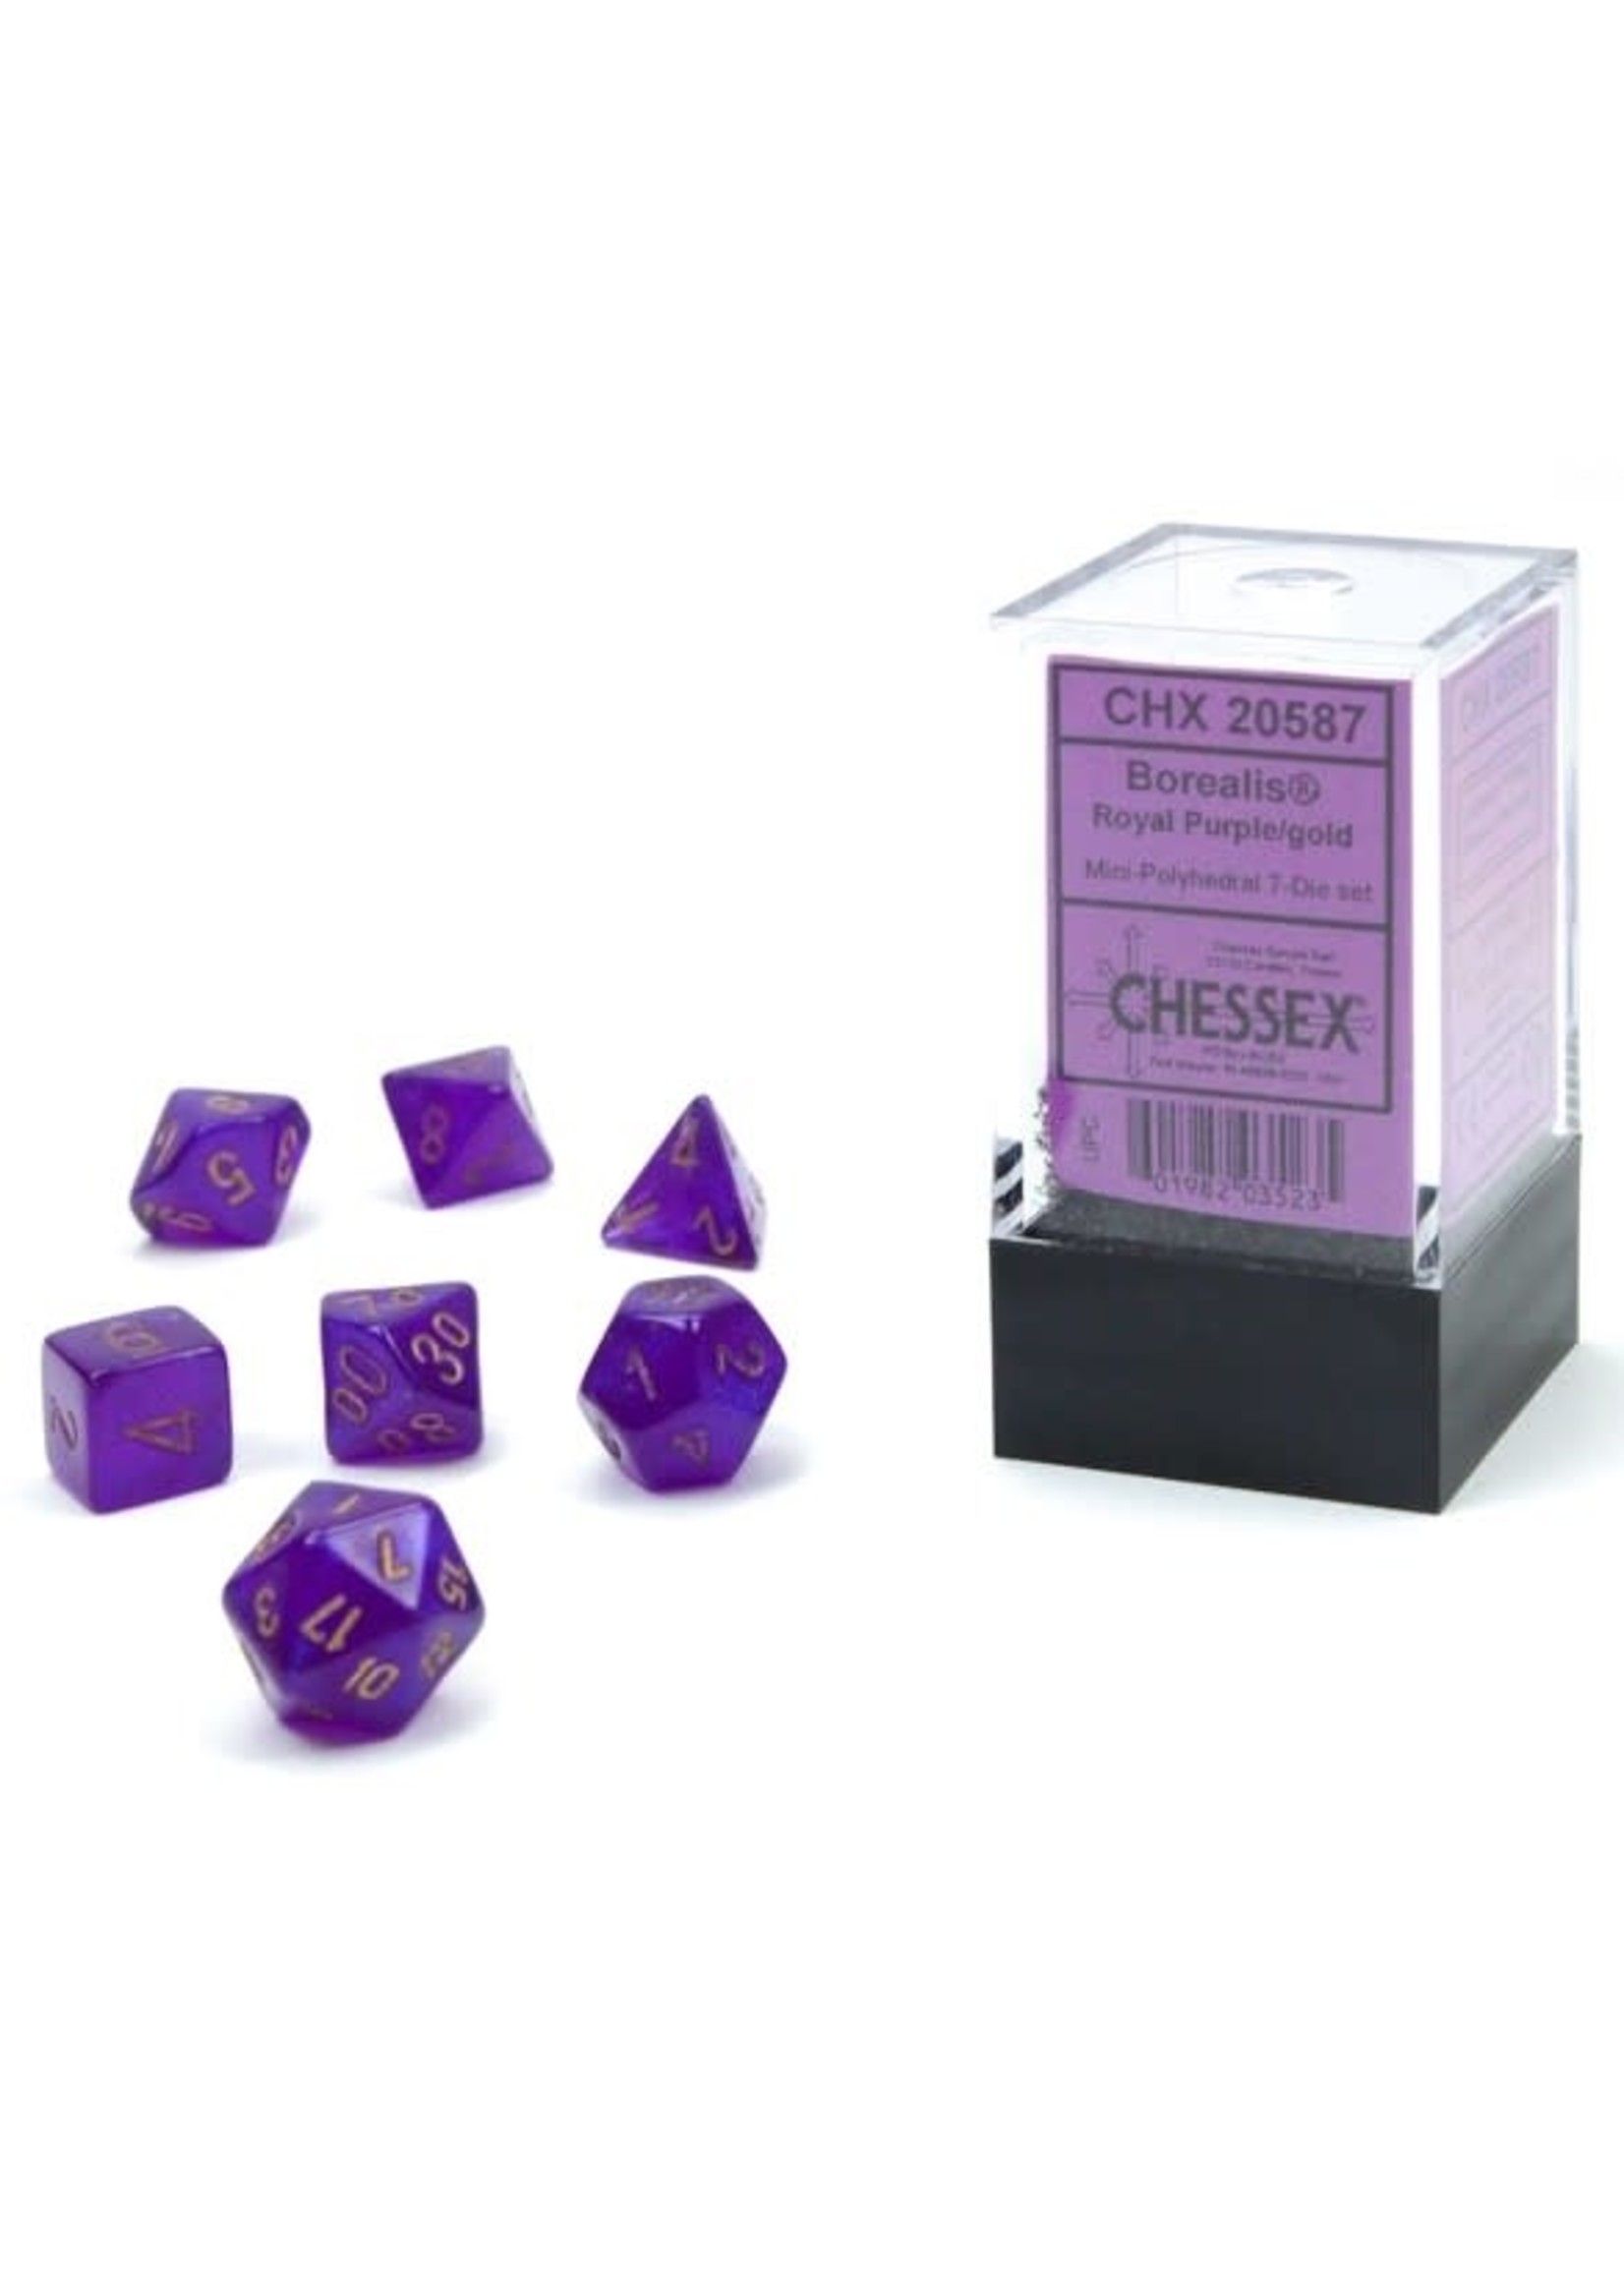 Chessex Luminary Borealis Mini 7 Set: Royal Purple w/ gold